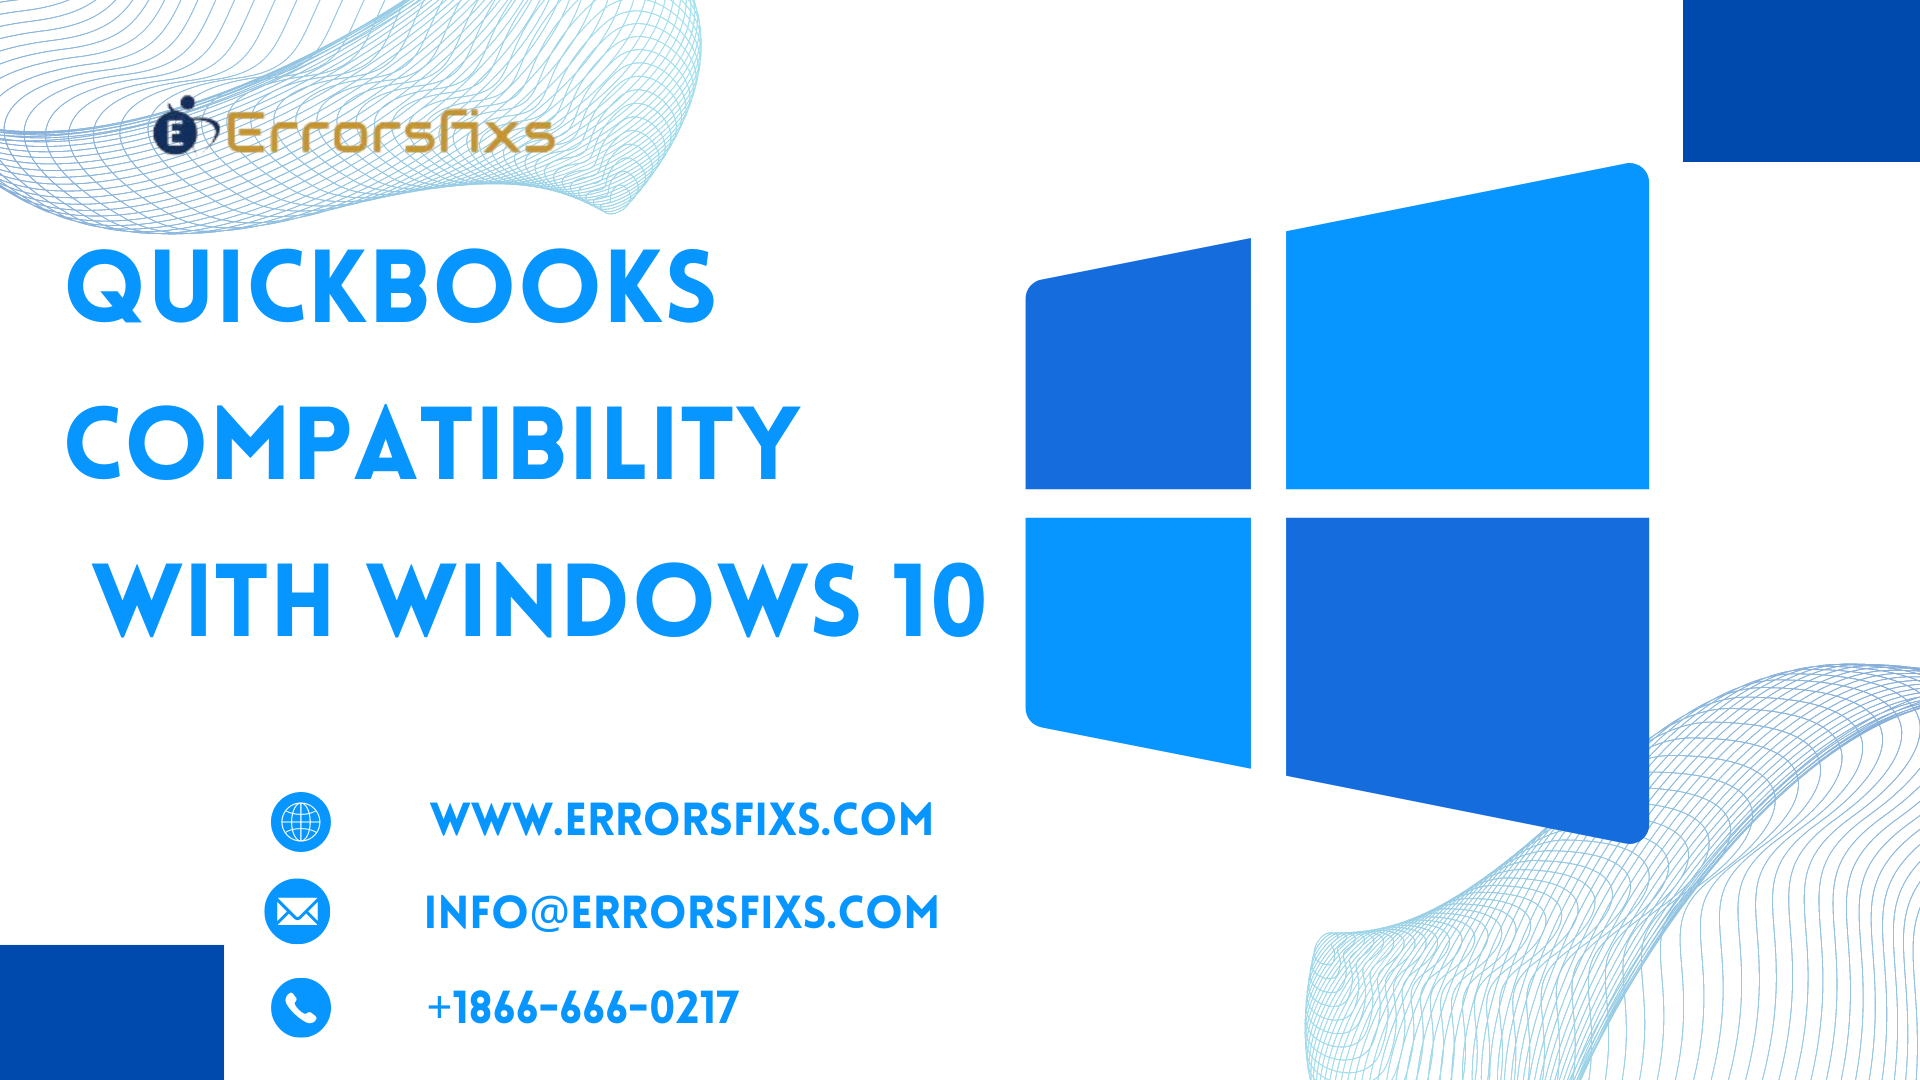 Quickbooks compatibility with Windows 10